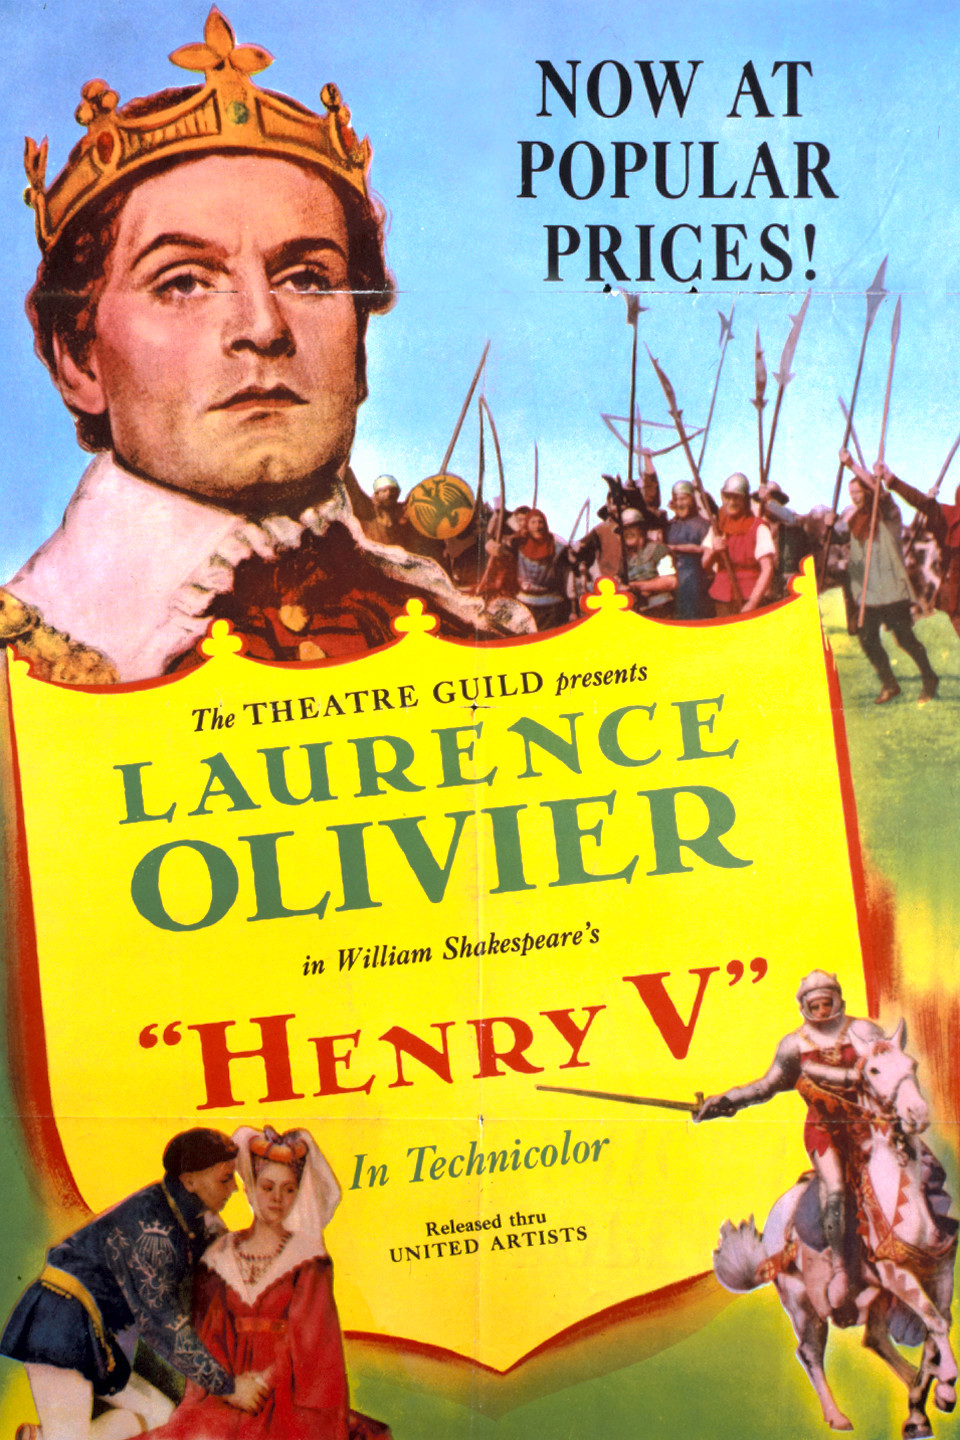 henry v movie poster showing